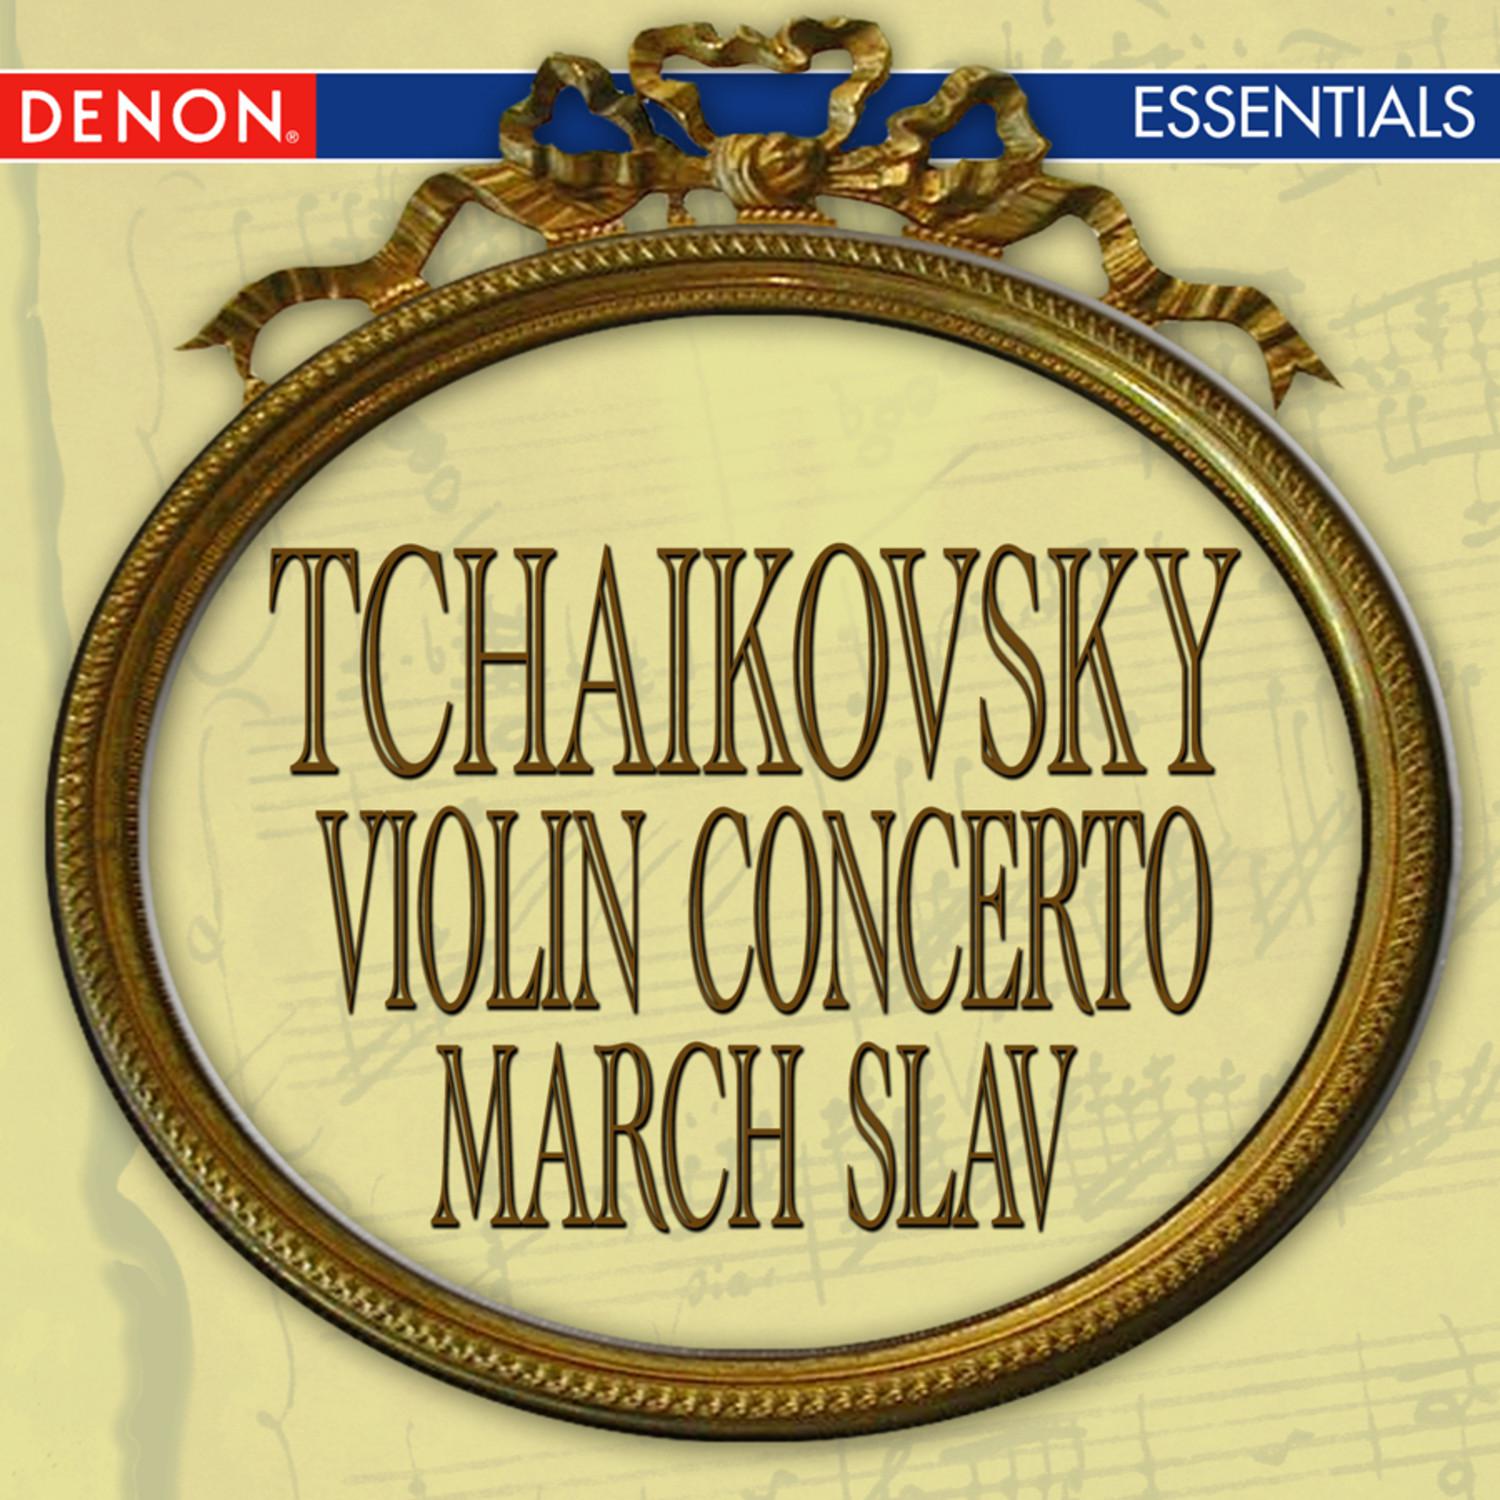 March Slav, Op. 31